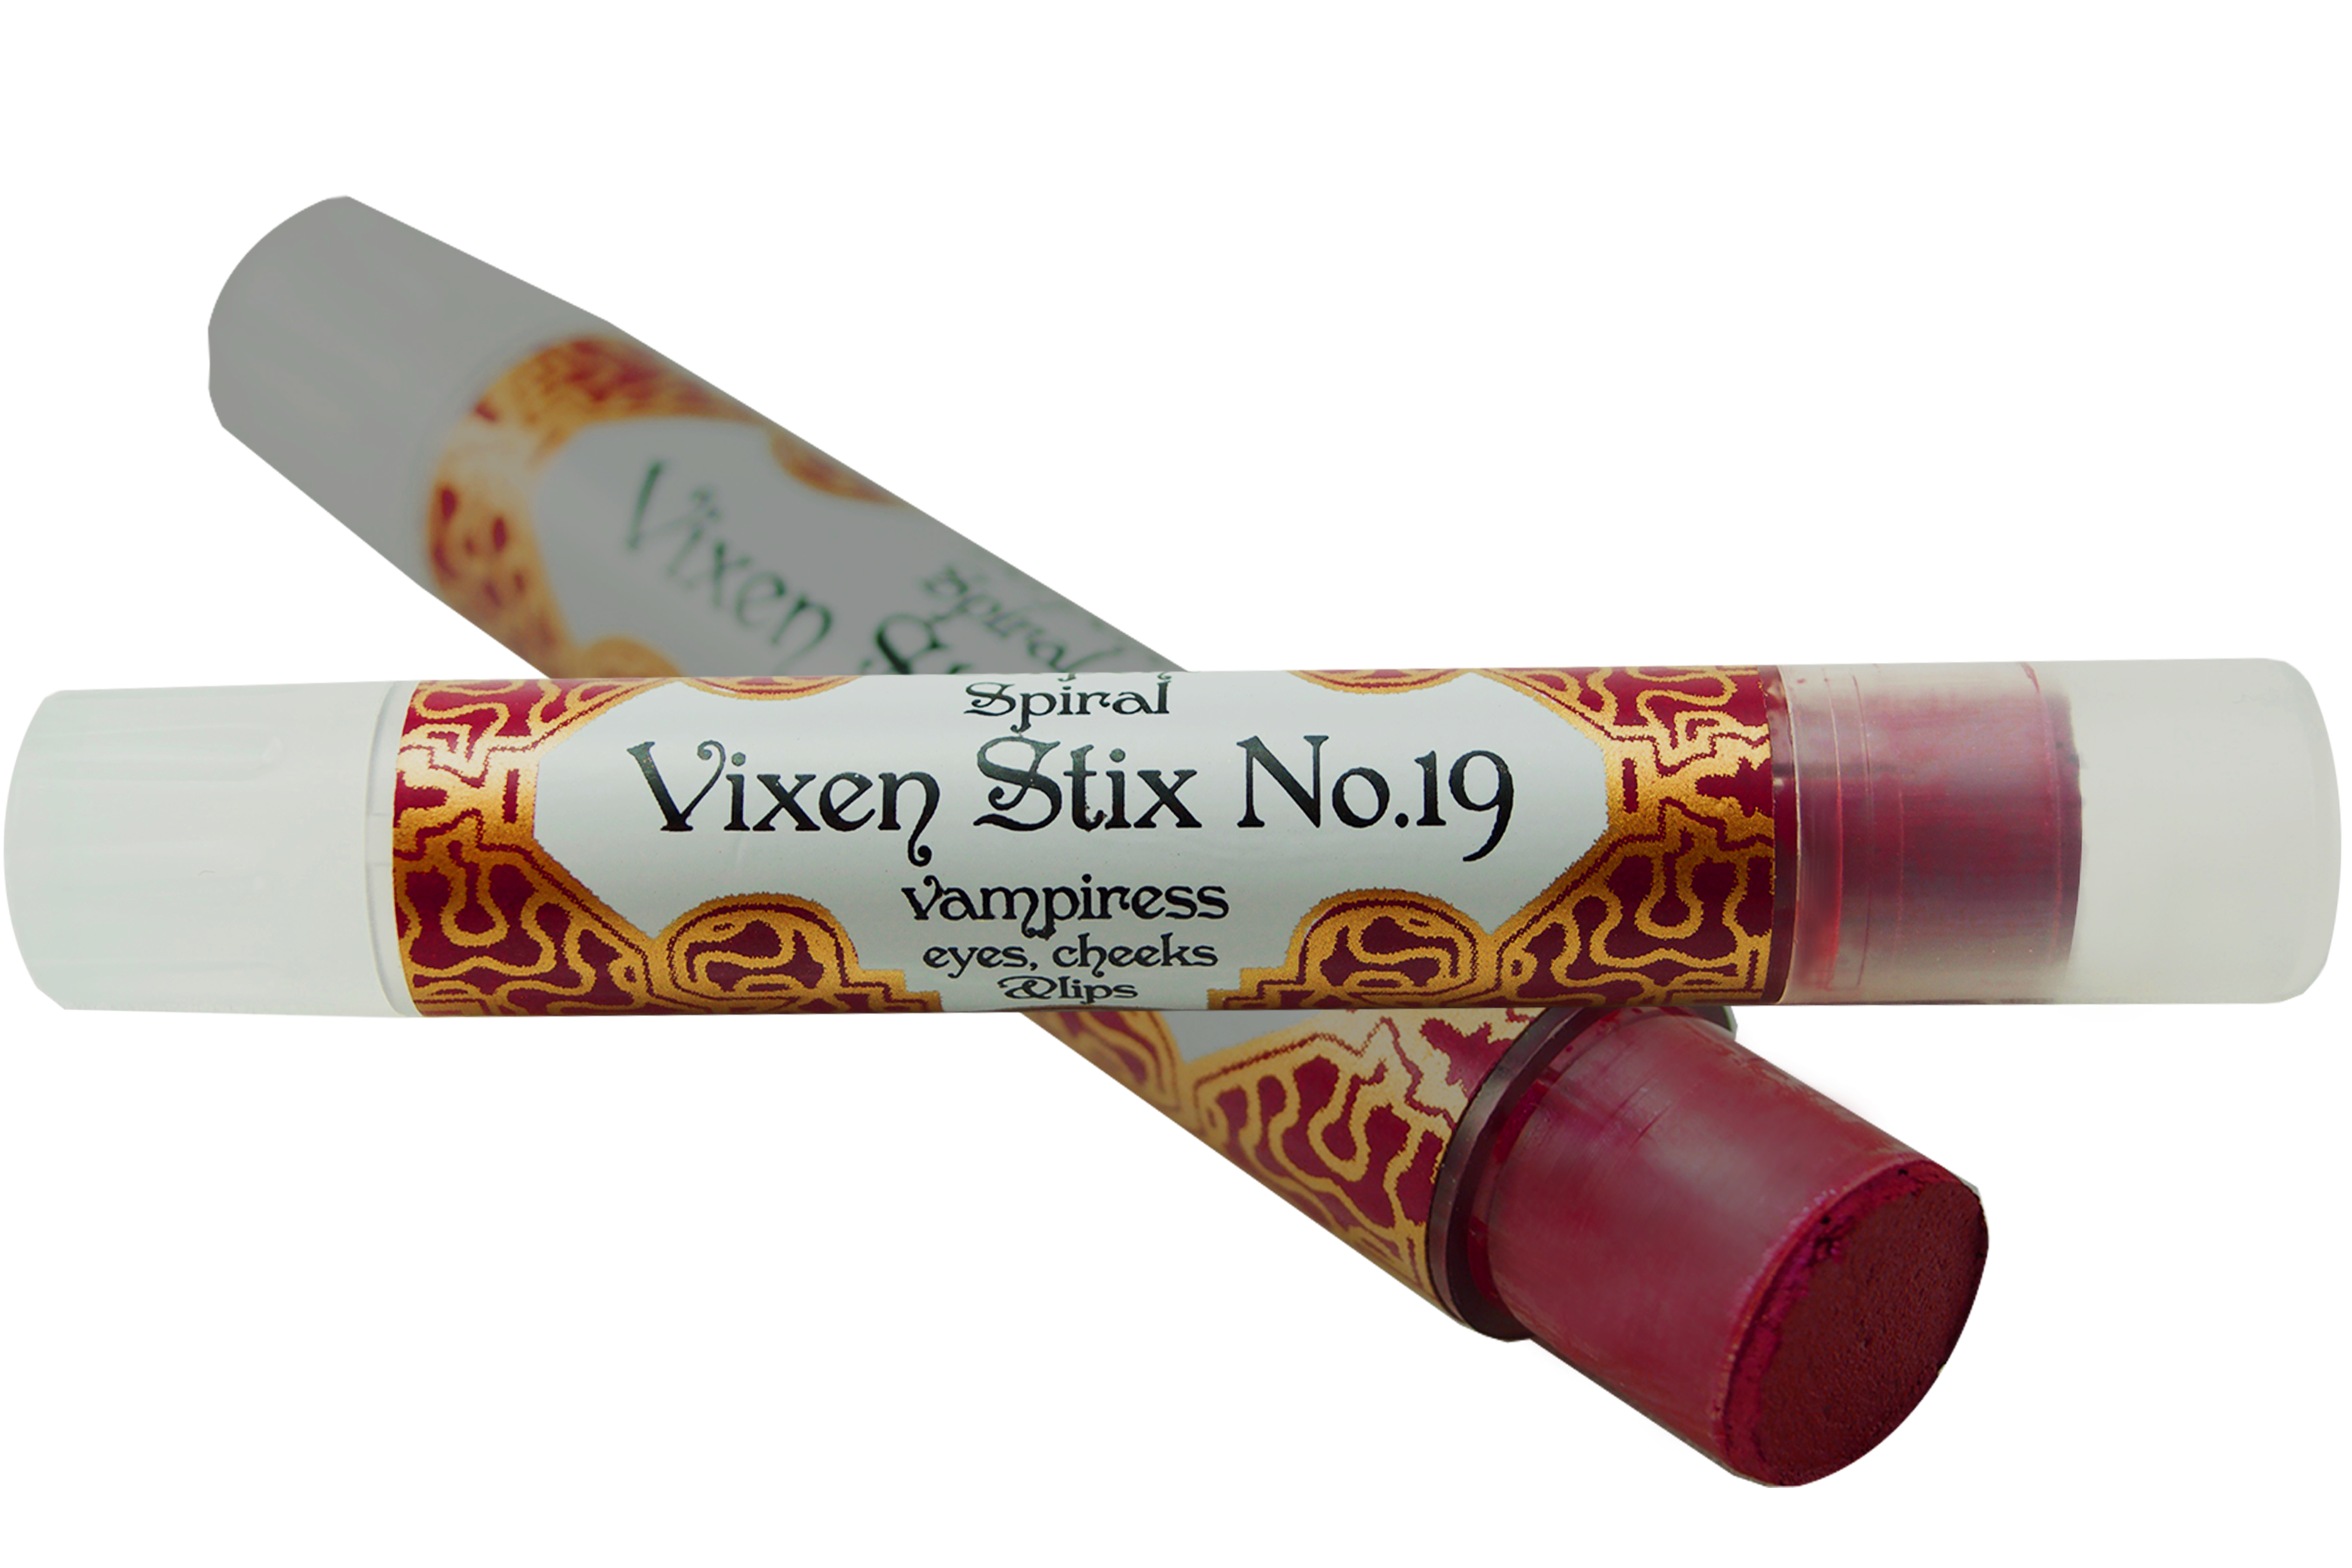 Vixen Stix No.19 ~ vampiress organic lip stick